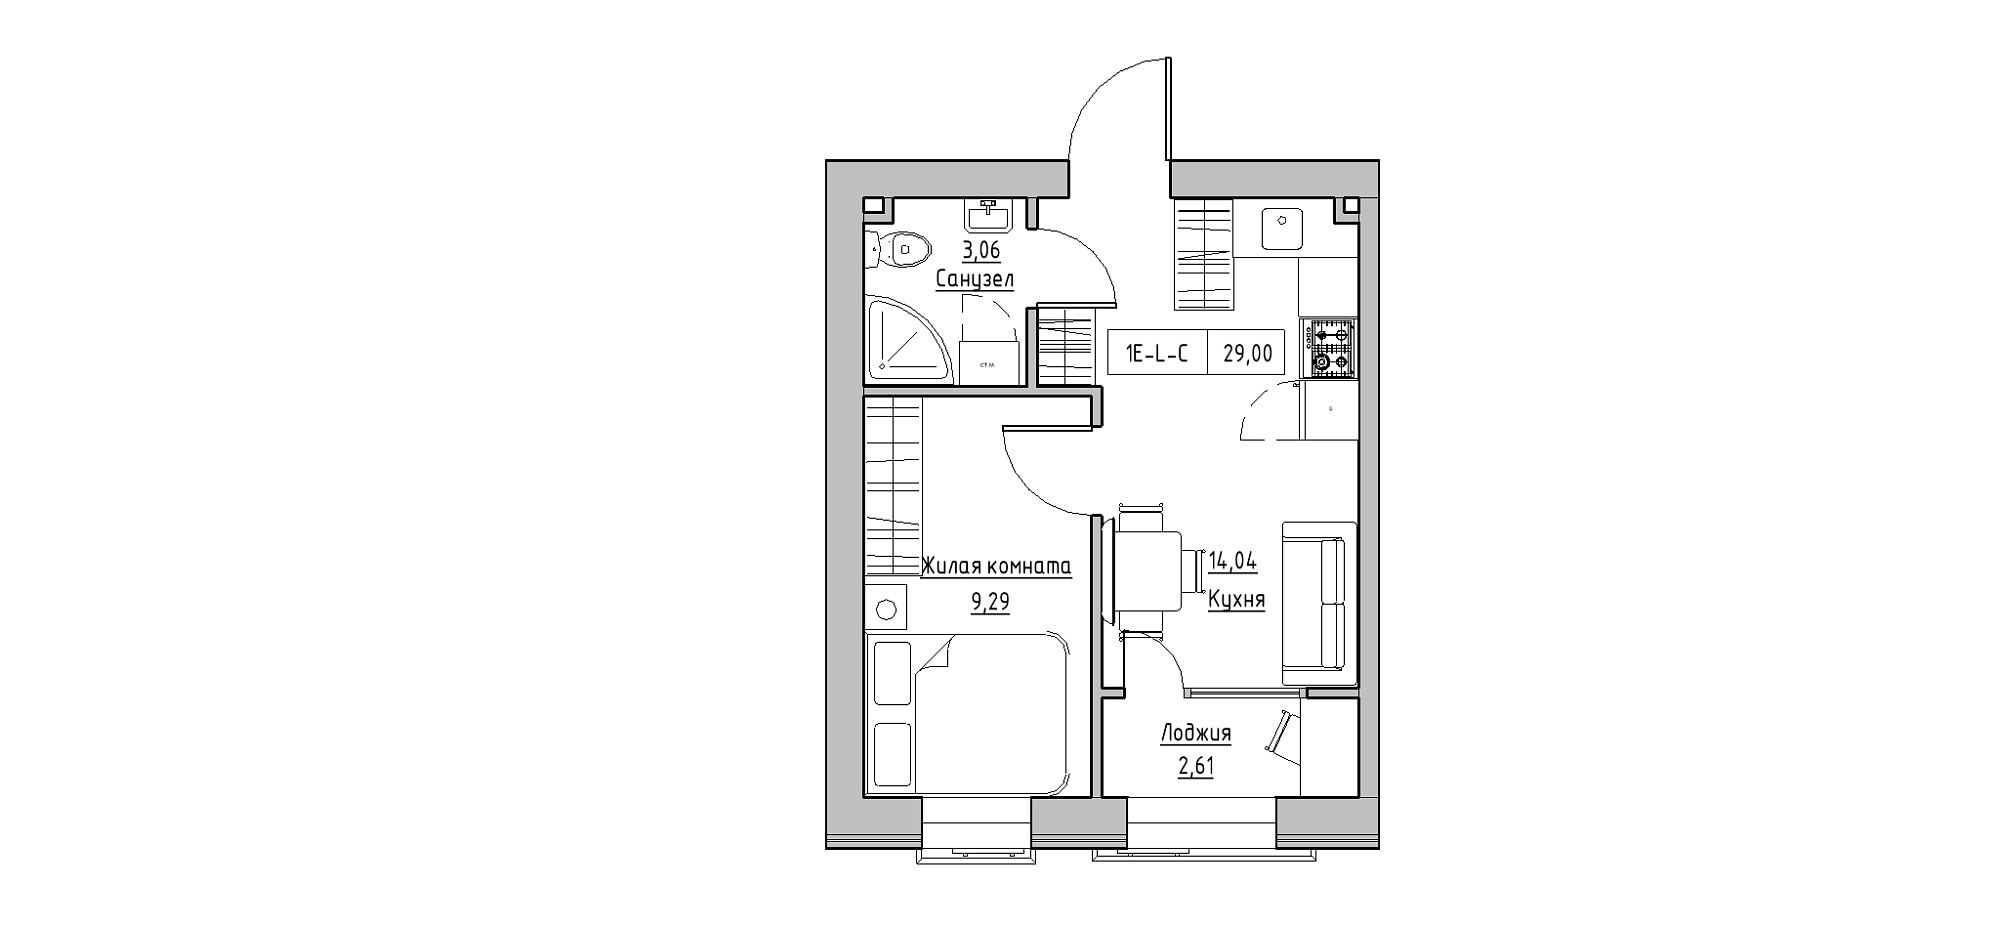 Planning 1-rm flats area 29m2, KS-020-03/0007.